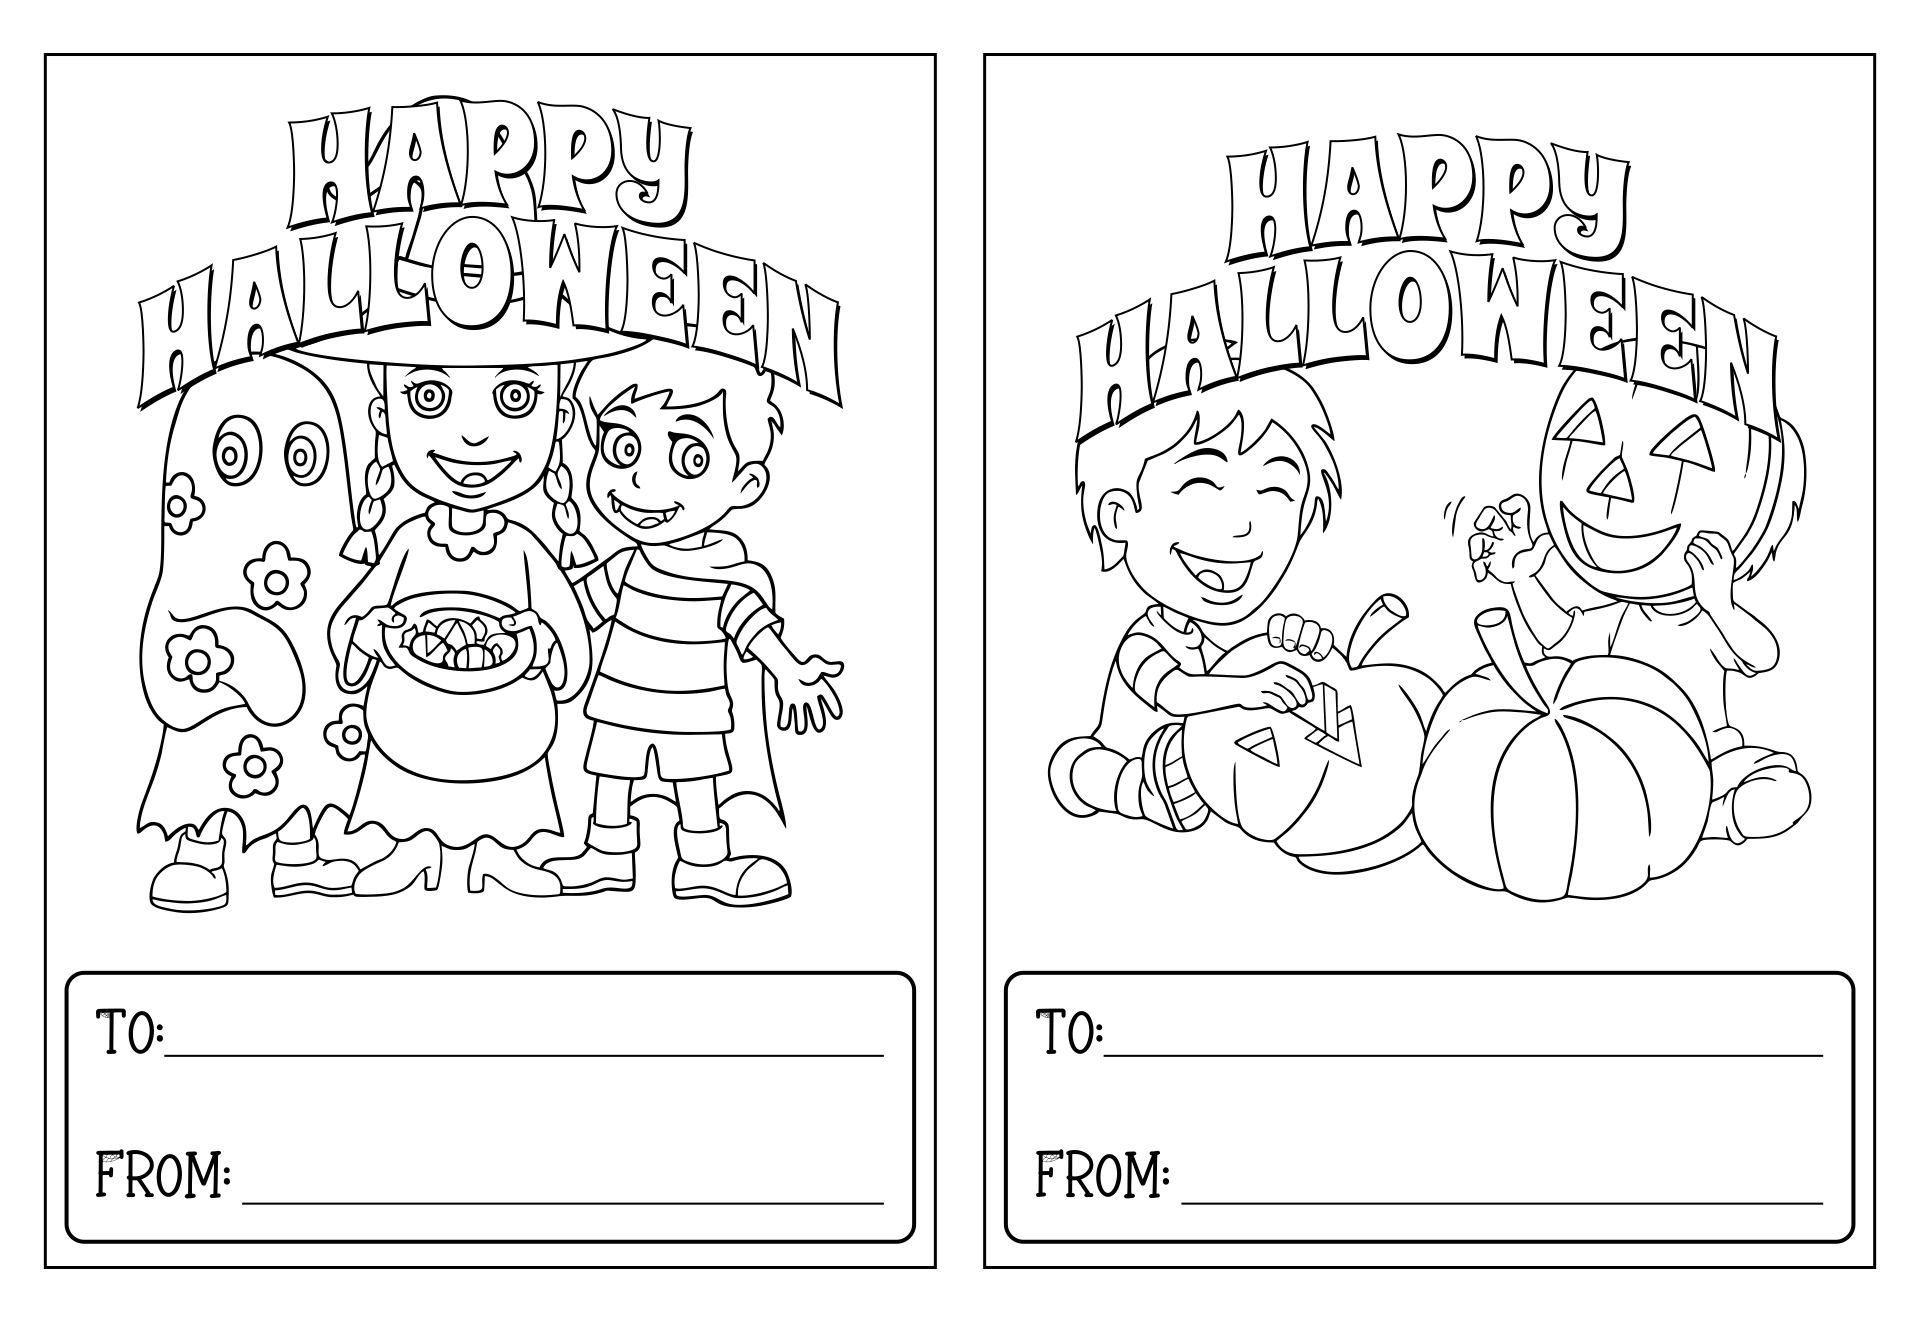 Free Printable Halloween Cards To Make